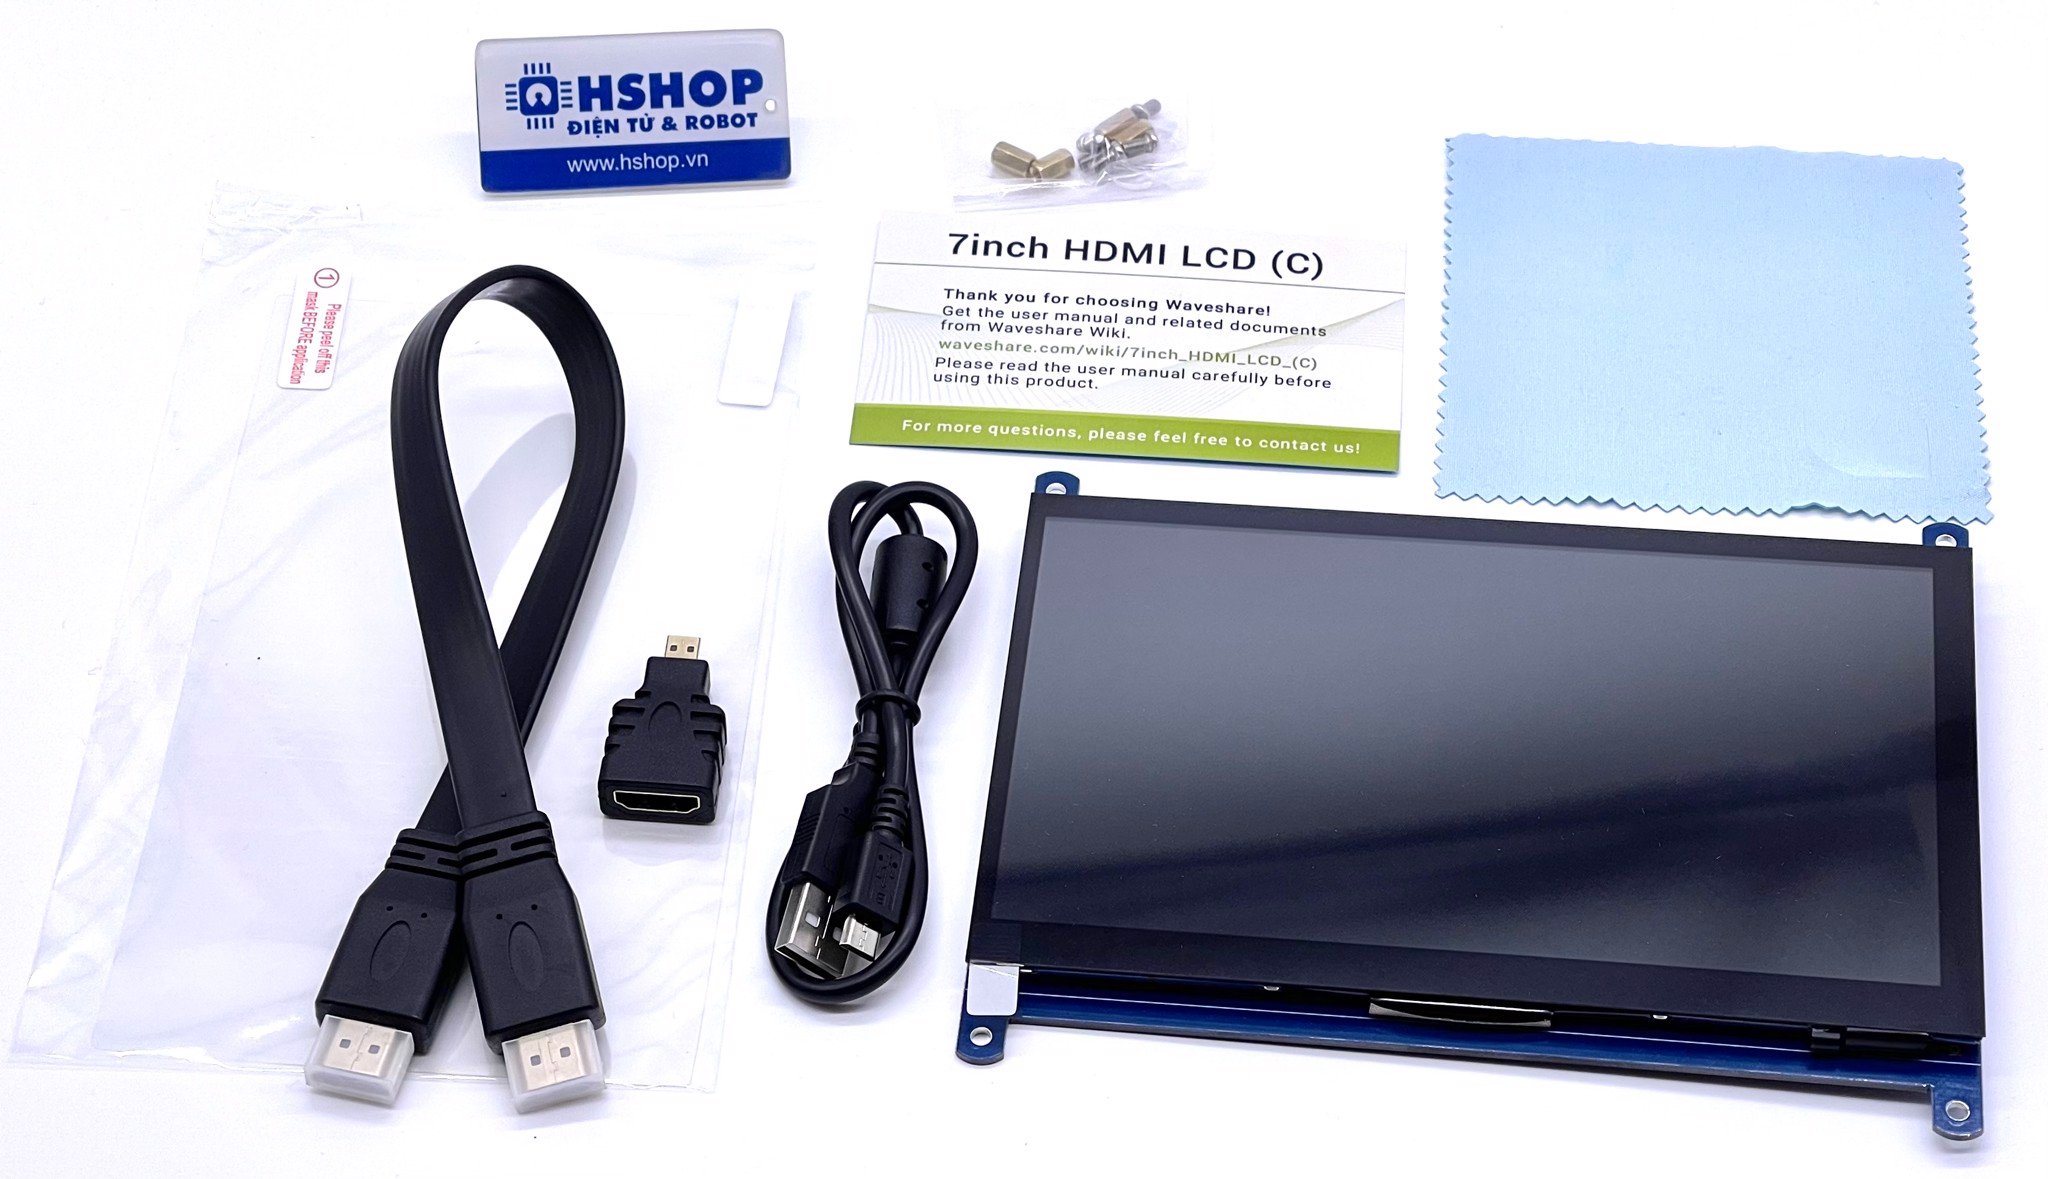 Màn hình Waveshare 7 inch HDMI Capacitive Touch Screen LCD (C)